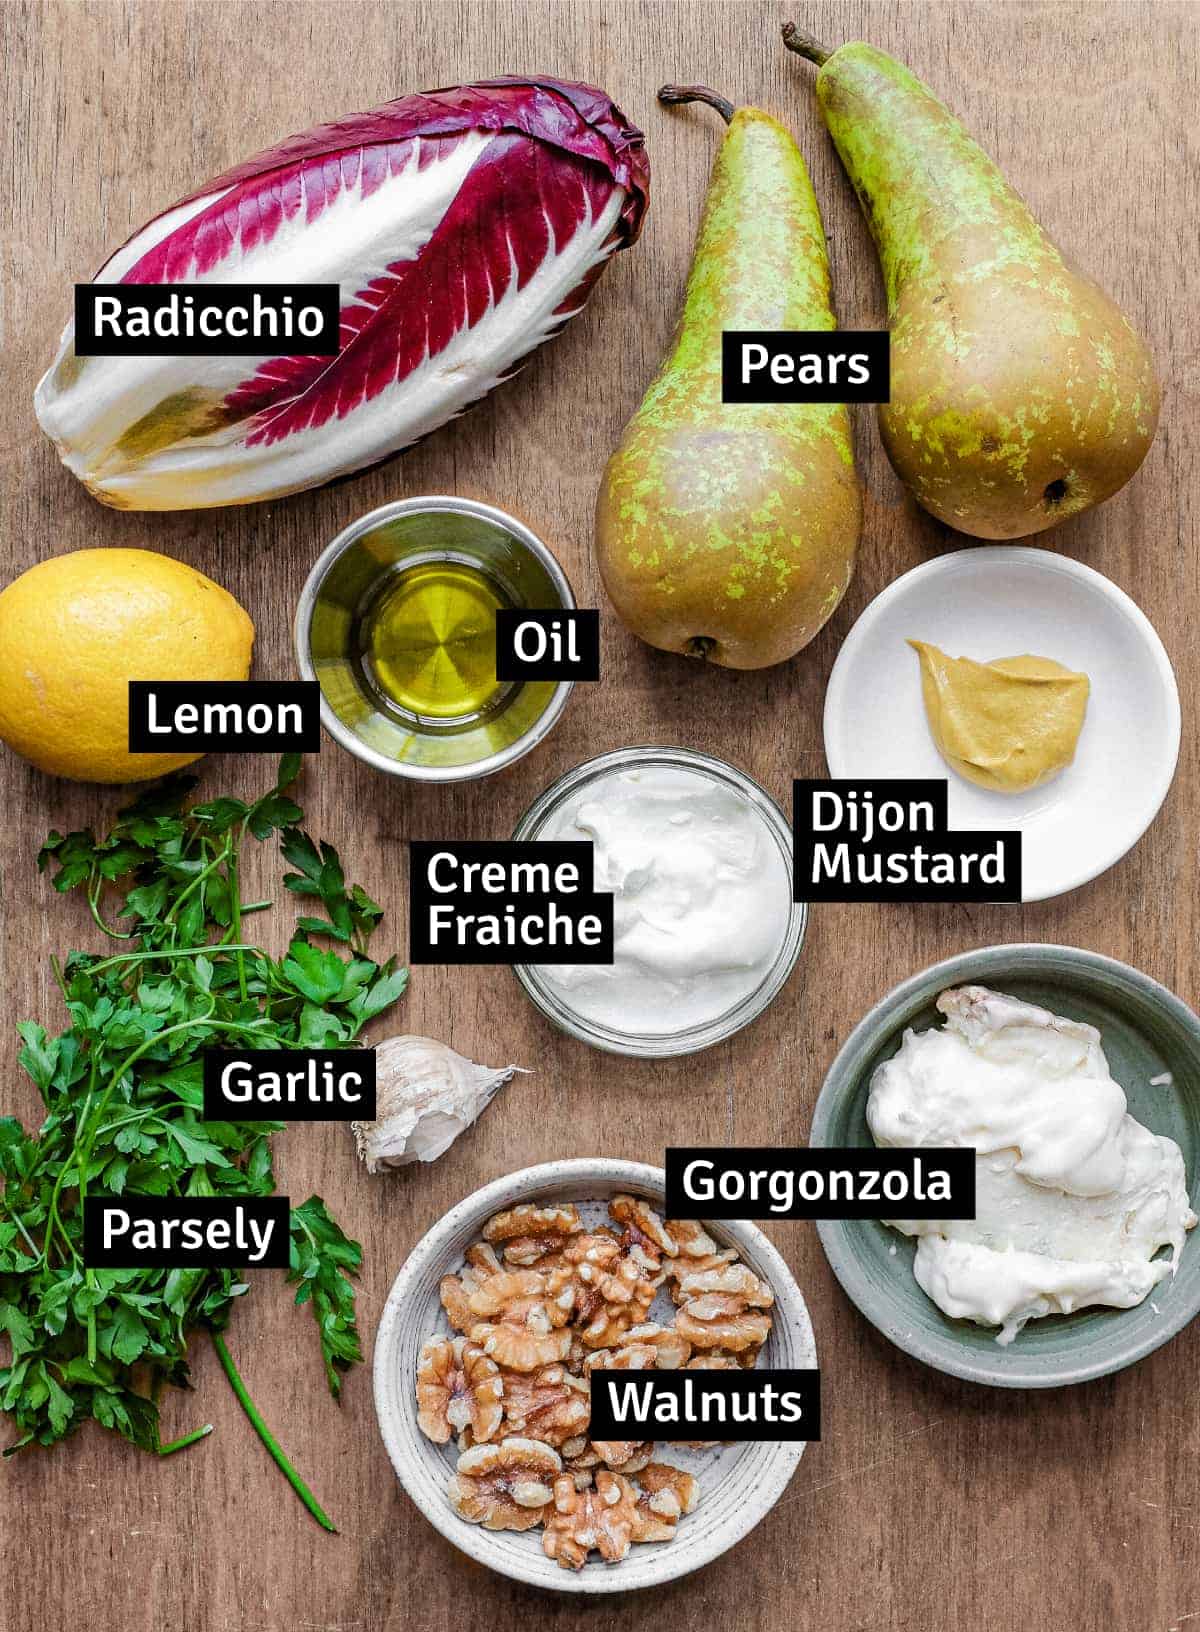 the ingredients for a radicchio, pear, and walnut salad with gorgonzola dressing: radicchio, pears, oil, lemon, gorgonzola, mustard, parsley, walnuts, garlic and creme fraiche.